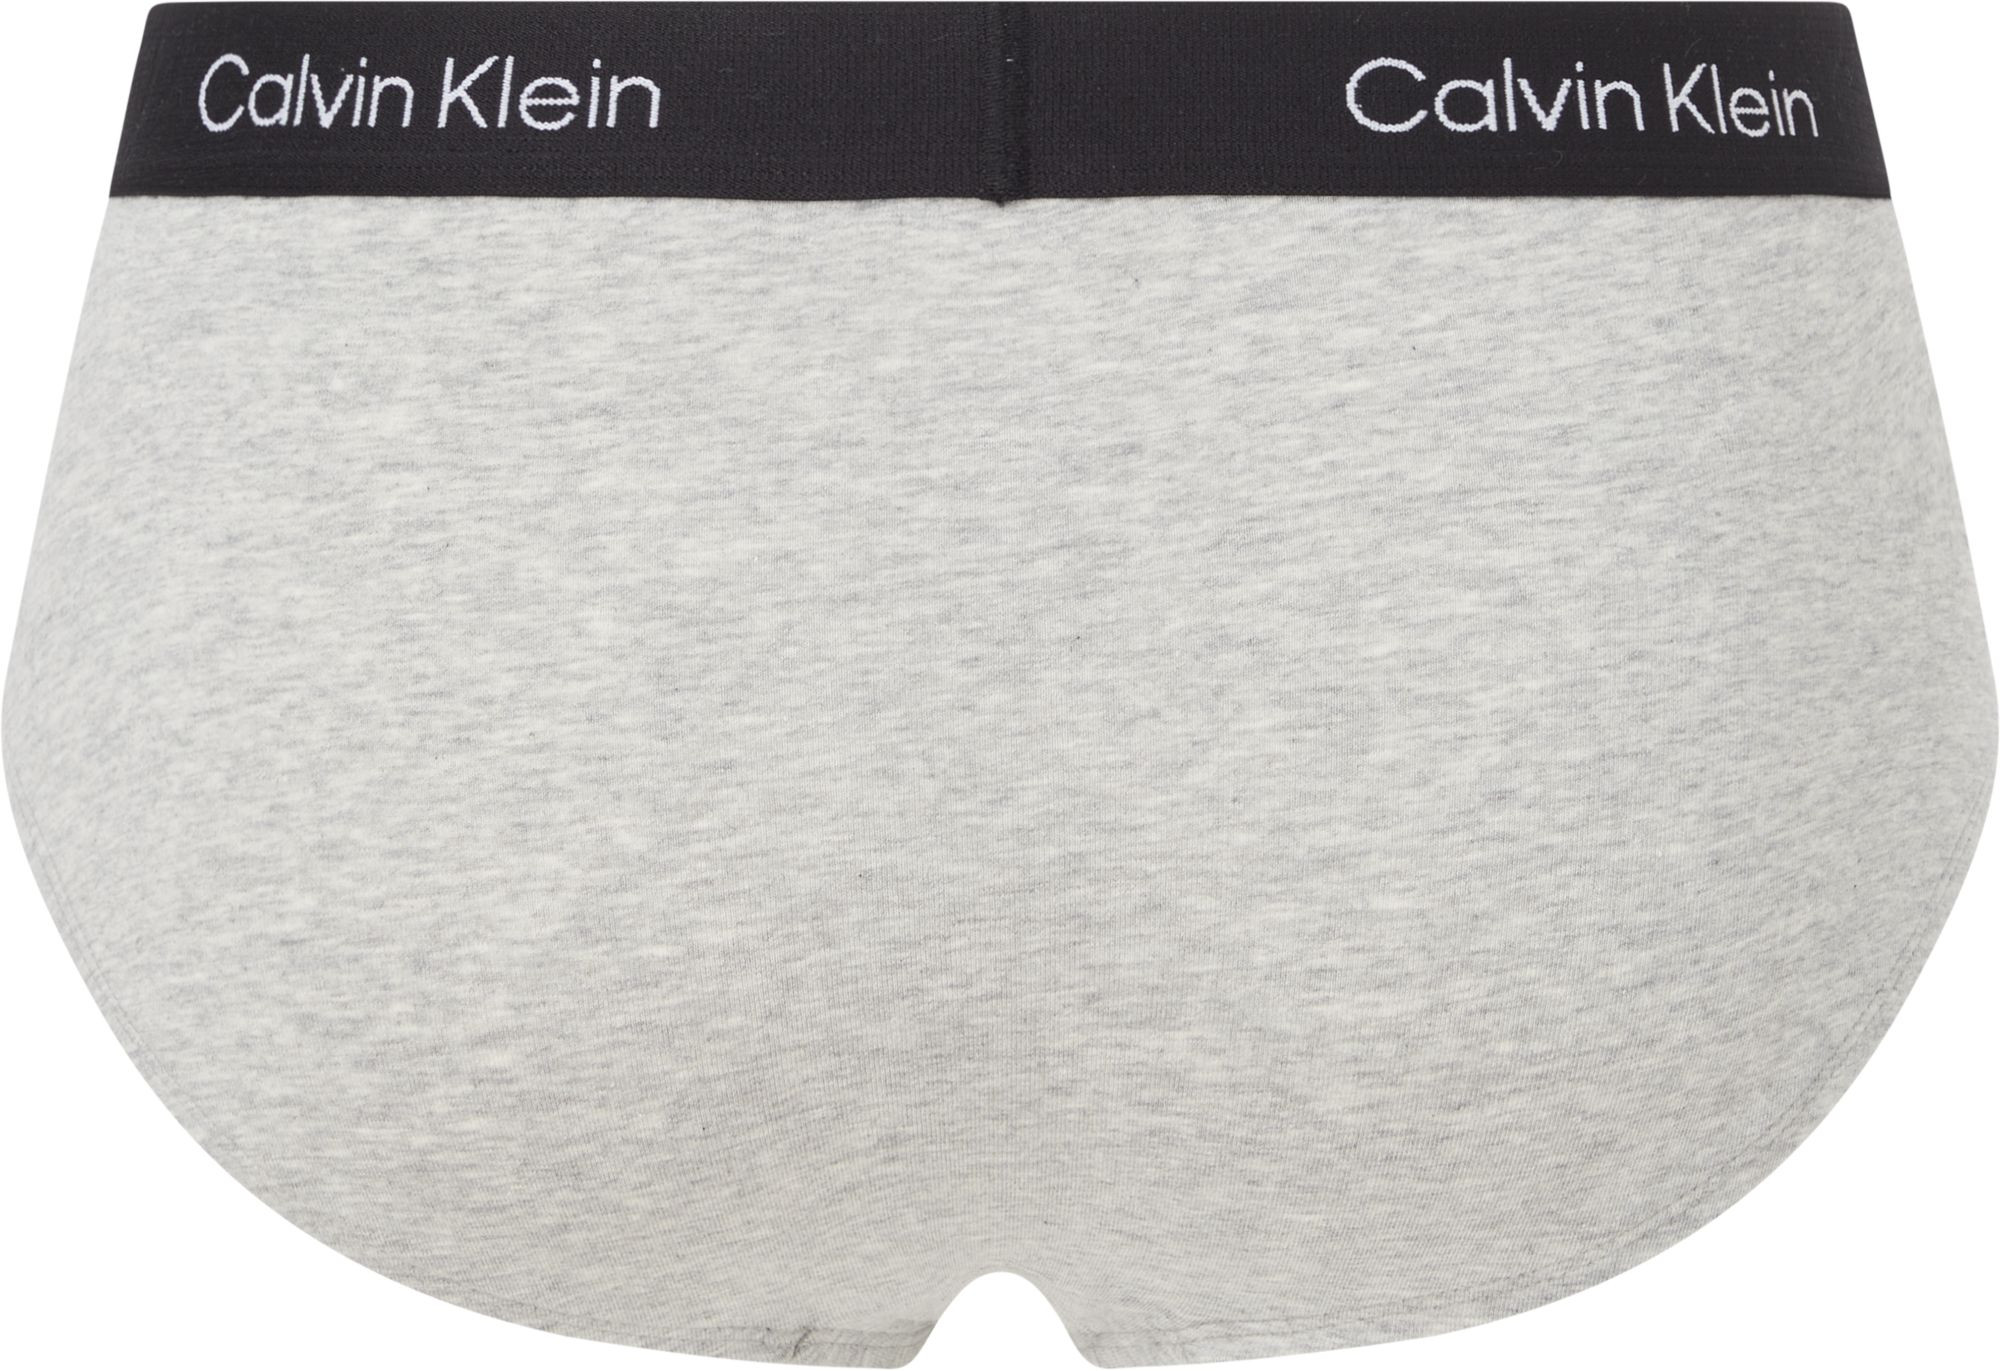 Pánské slipy 3 Pack Briefs CK96 000NB3527A6H3 černá/bílá/šedá - Calvin Klein S